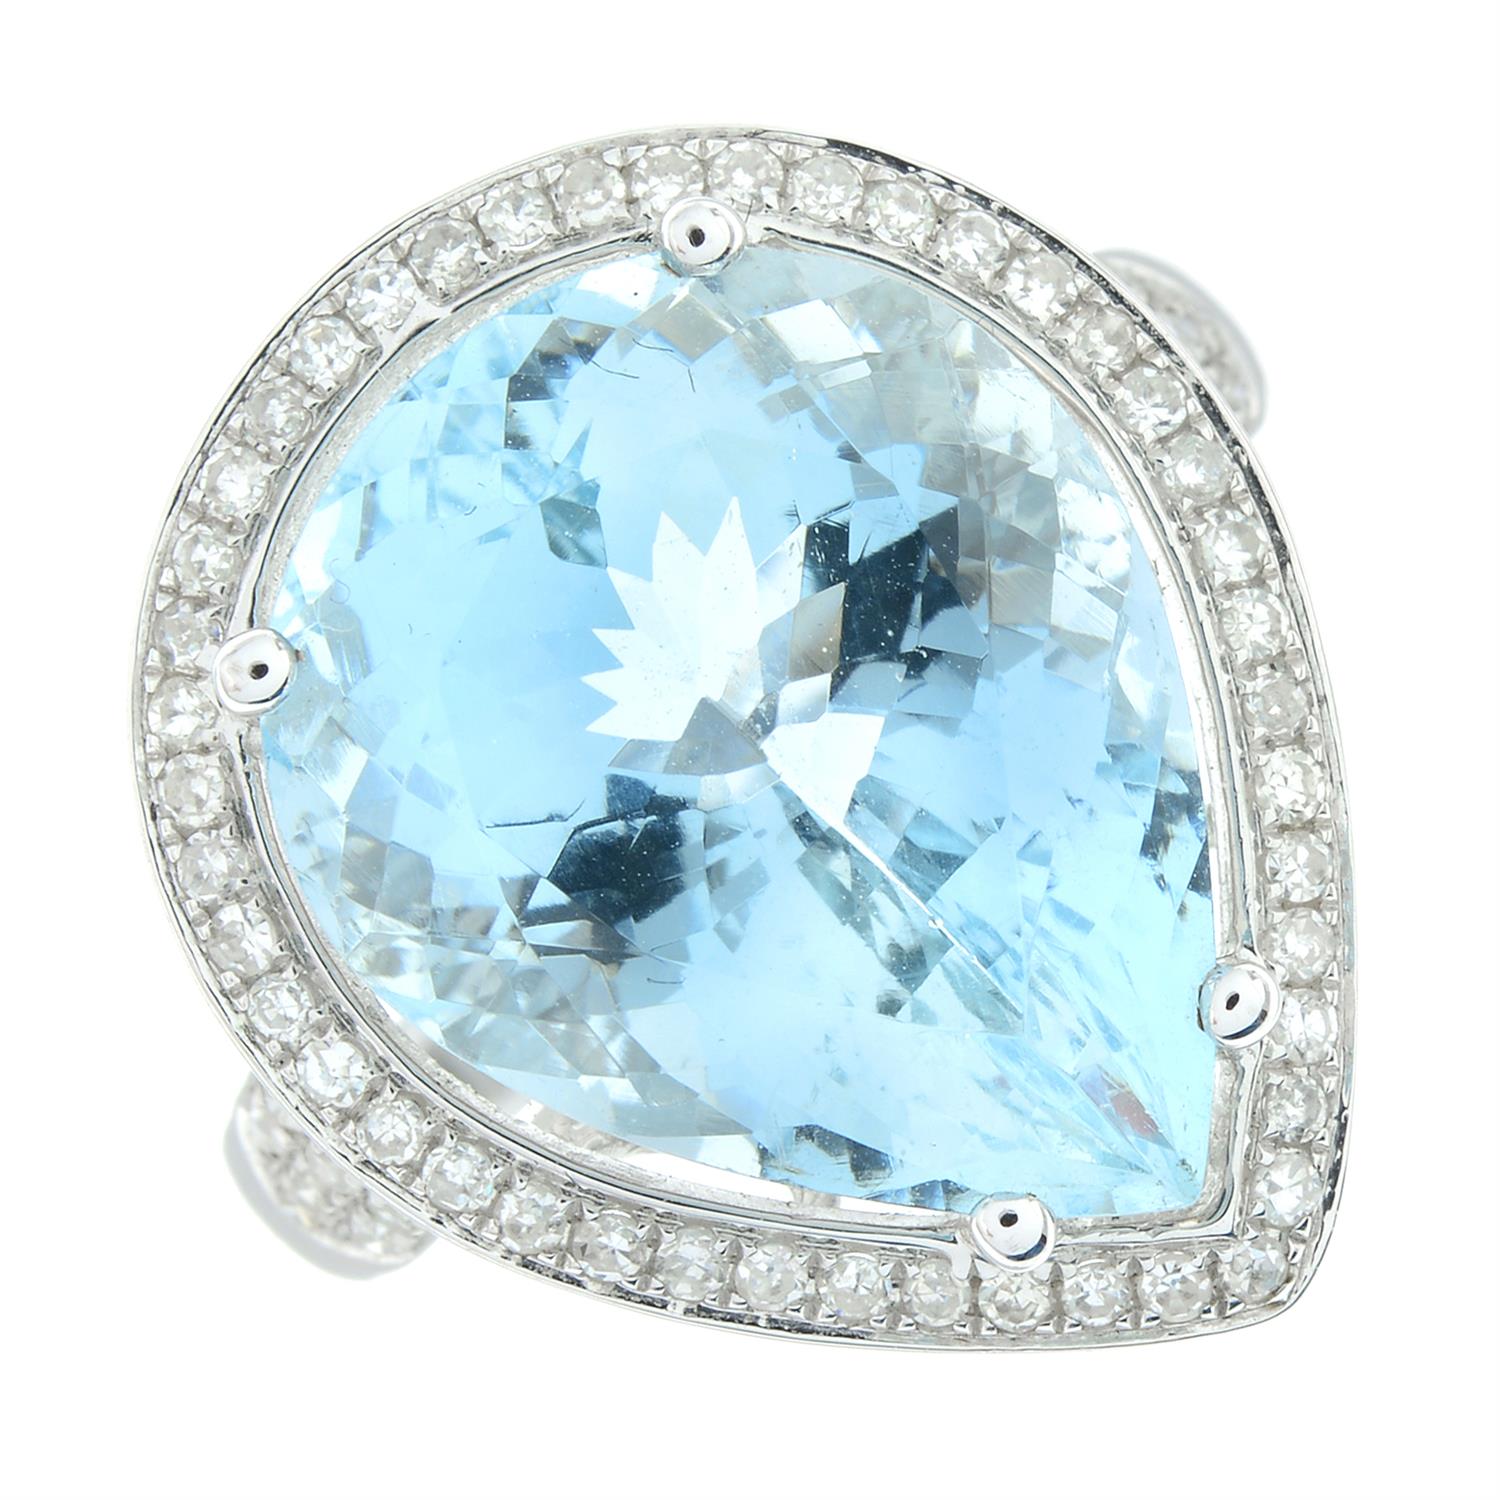 Aquamarine and diamond ring - Image 2 of 5